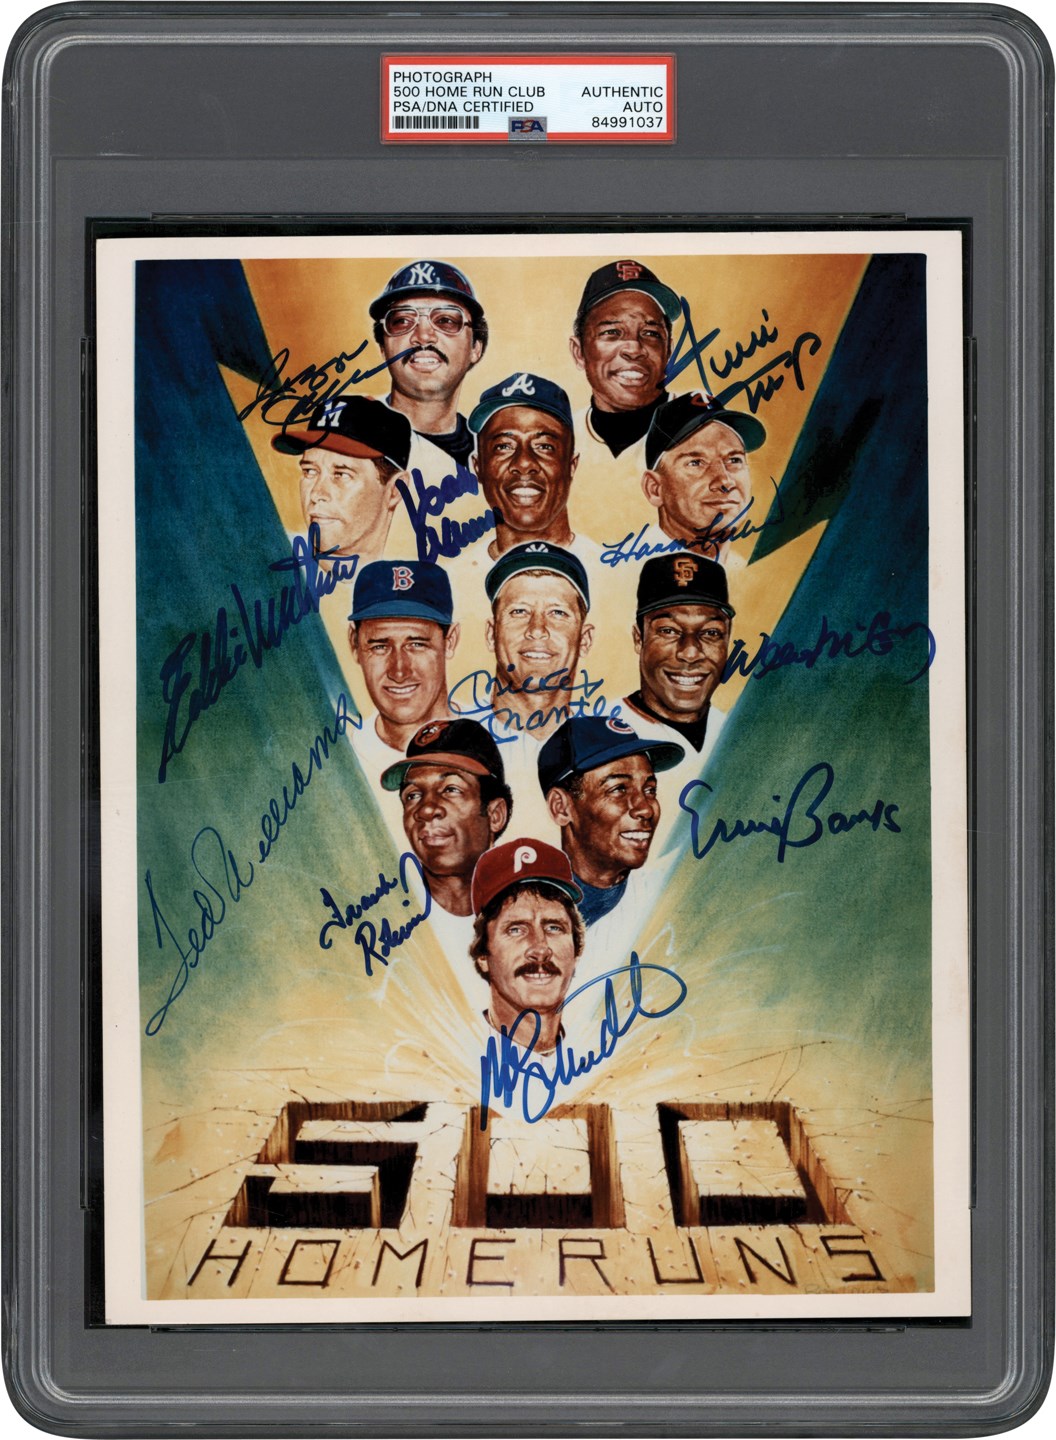 Baseball Autographs - 500 Home Run Club Signed Photograph (PSA)